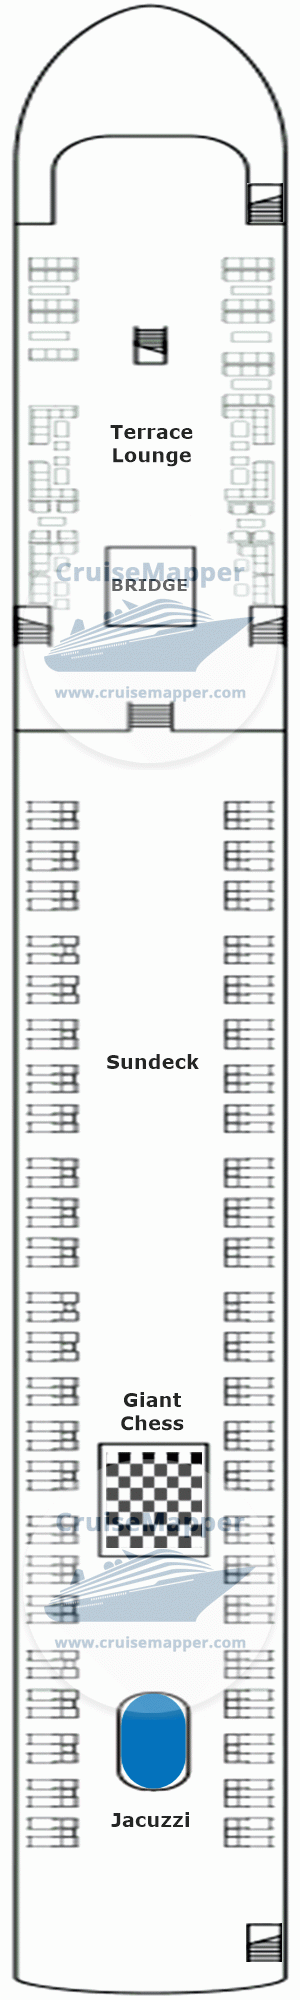 Spirit of the Danube Deck 04 - Sundeck-Pool